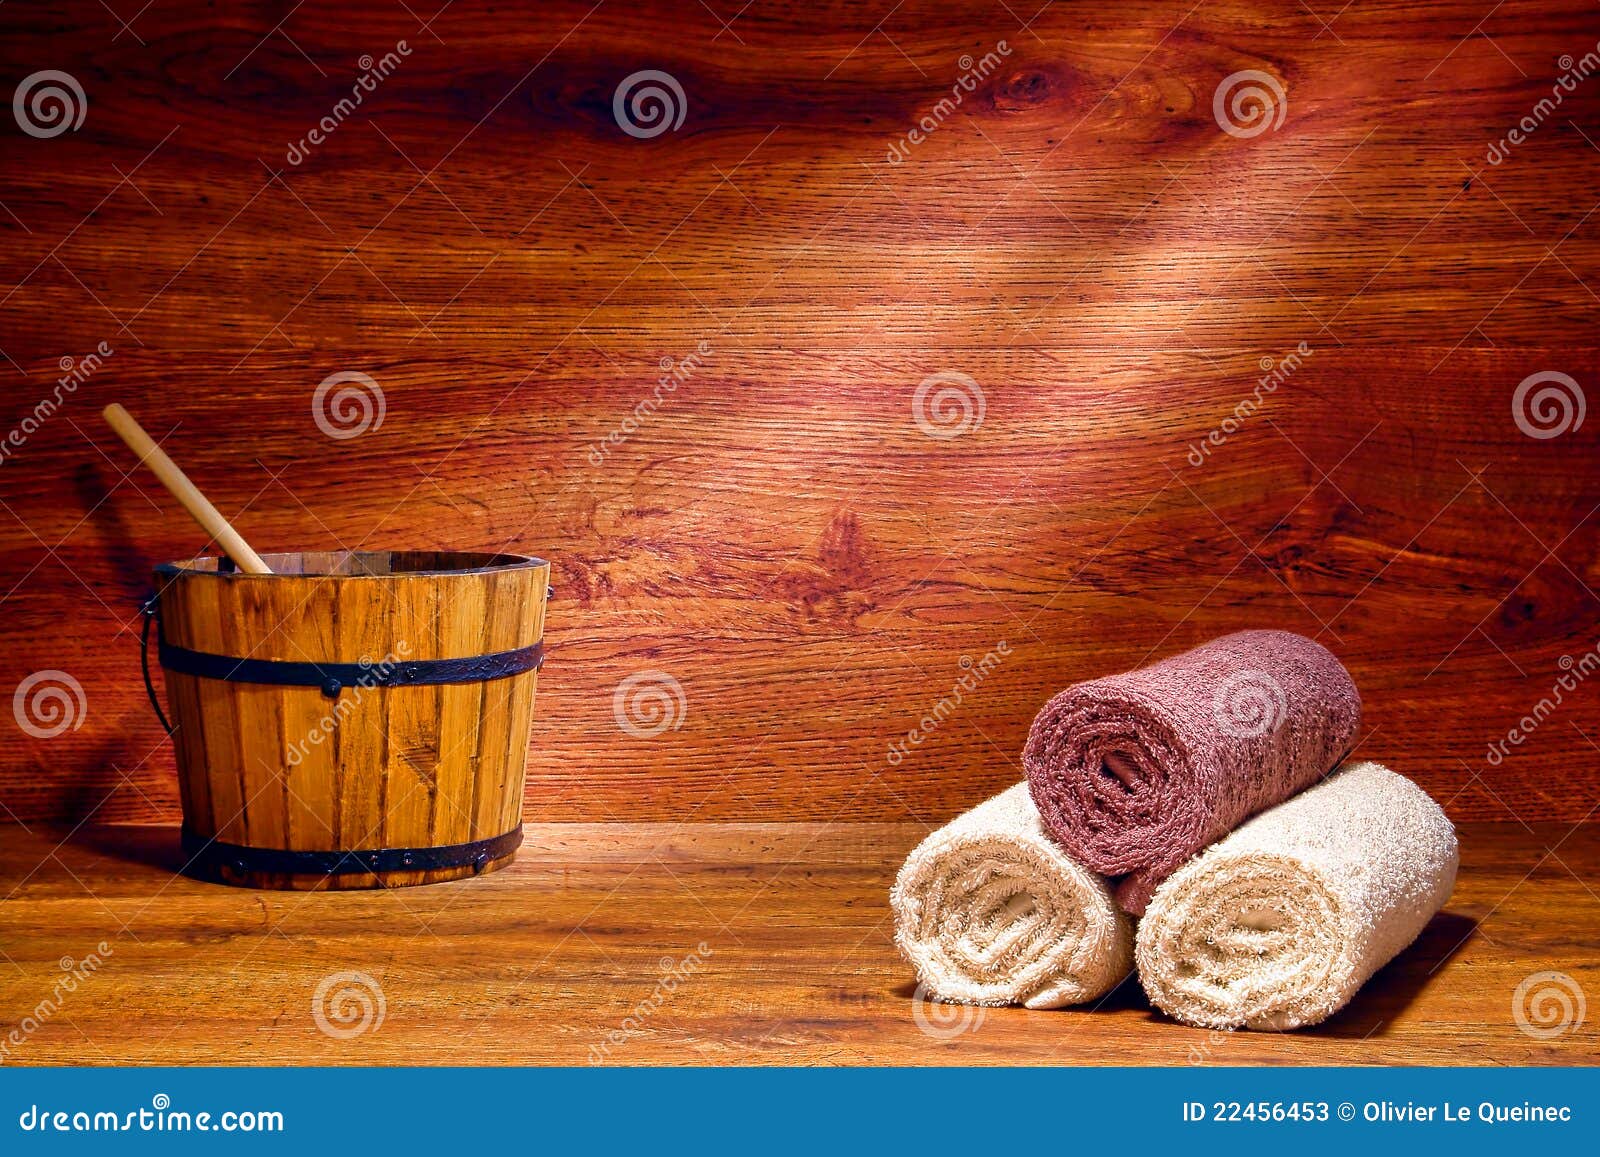 https://thumbs.dreamstime.com/z/cotton-towels-traditional-wood-sauna-spa-22456453.jpg